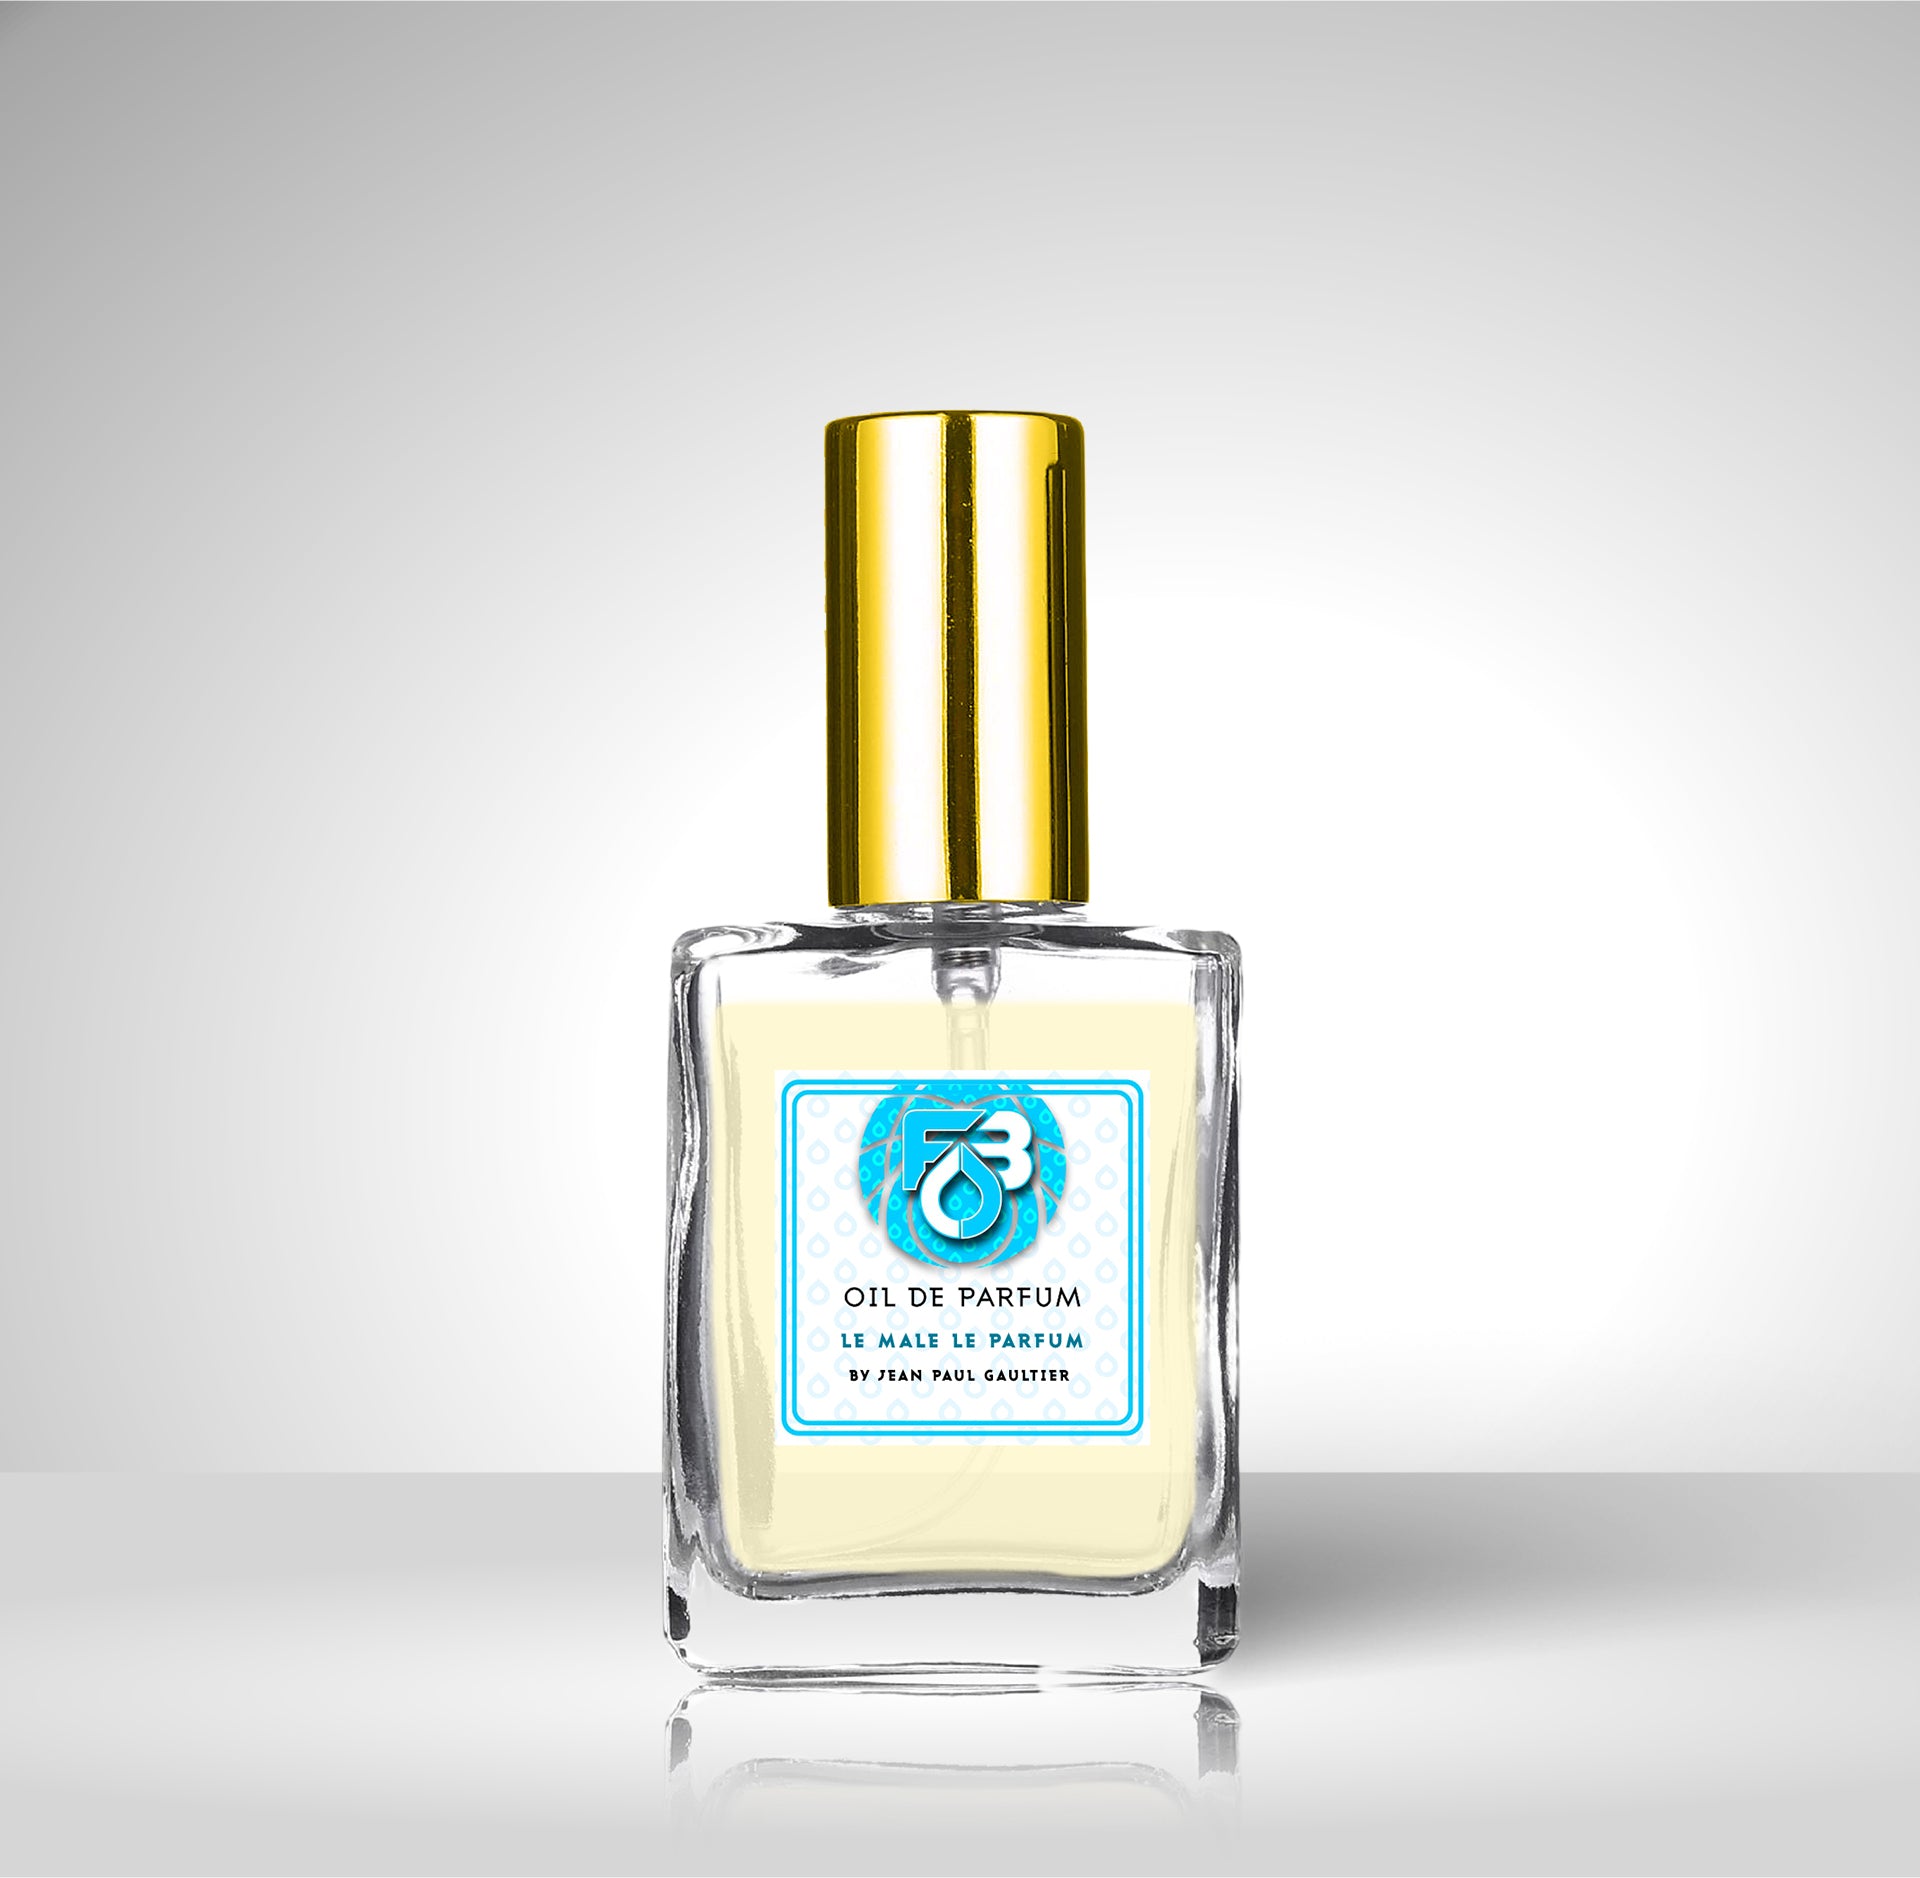 Compare To Le Male Parfum®